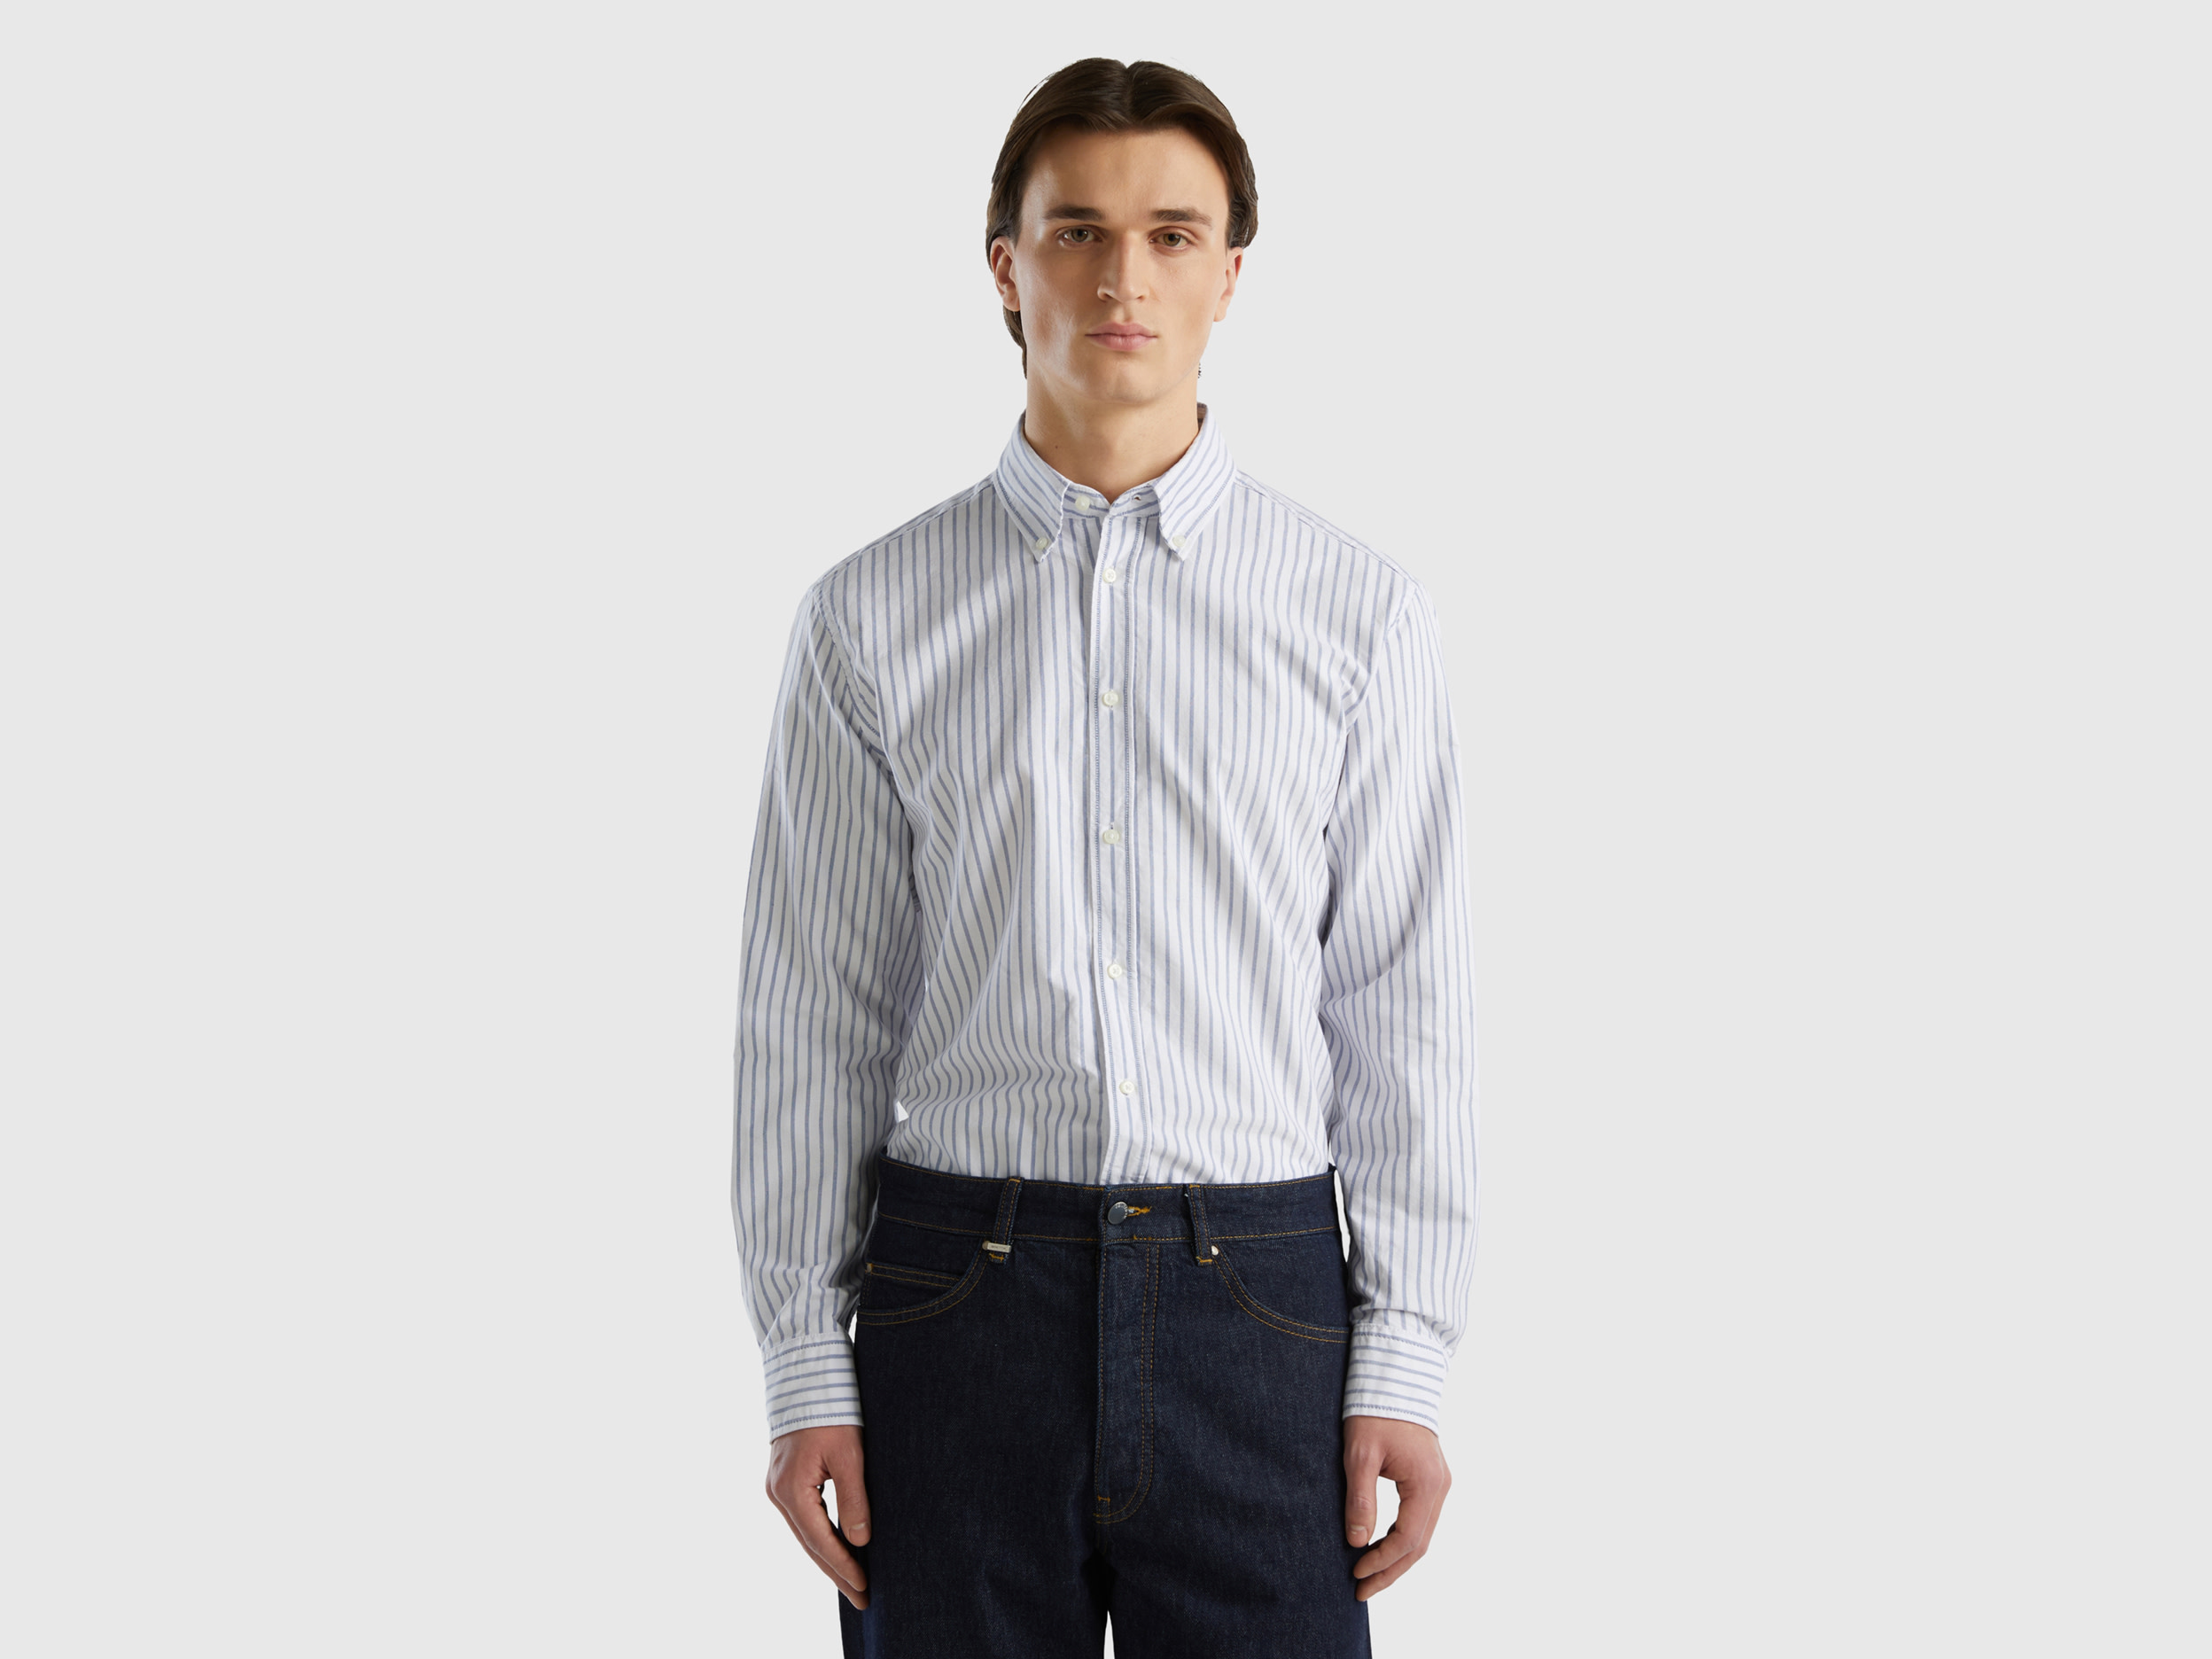 Benetton, 100% Cotton Striped Shirt, size XXXL, Light Blue, Men